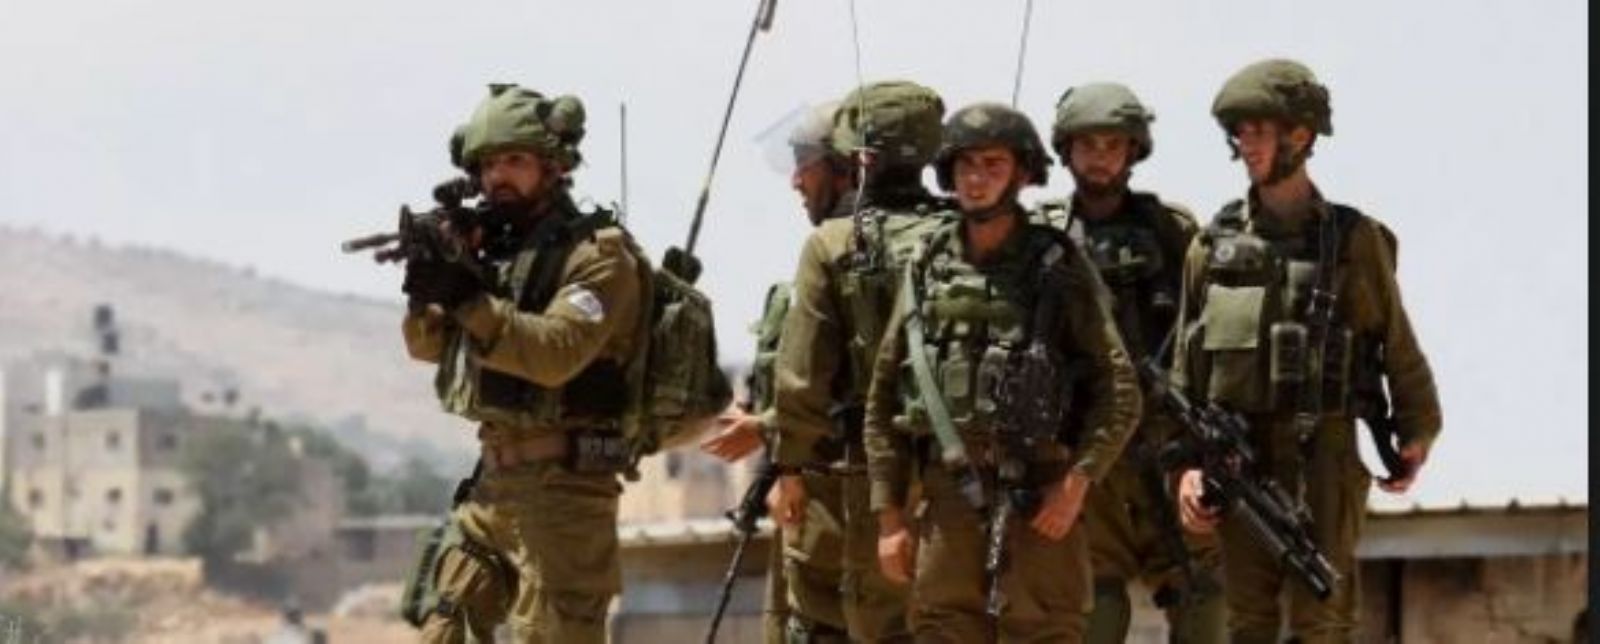 Israel judiciary protecting perpetrators of crimes against Palestinians